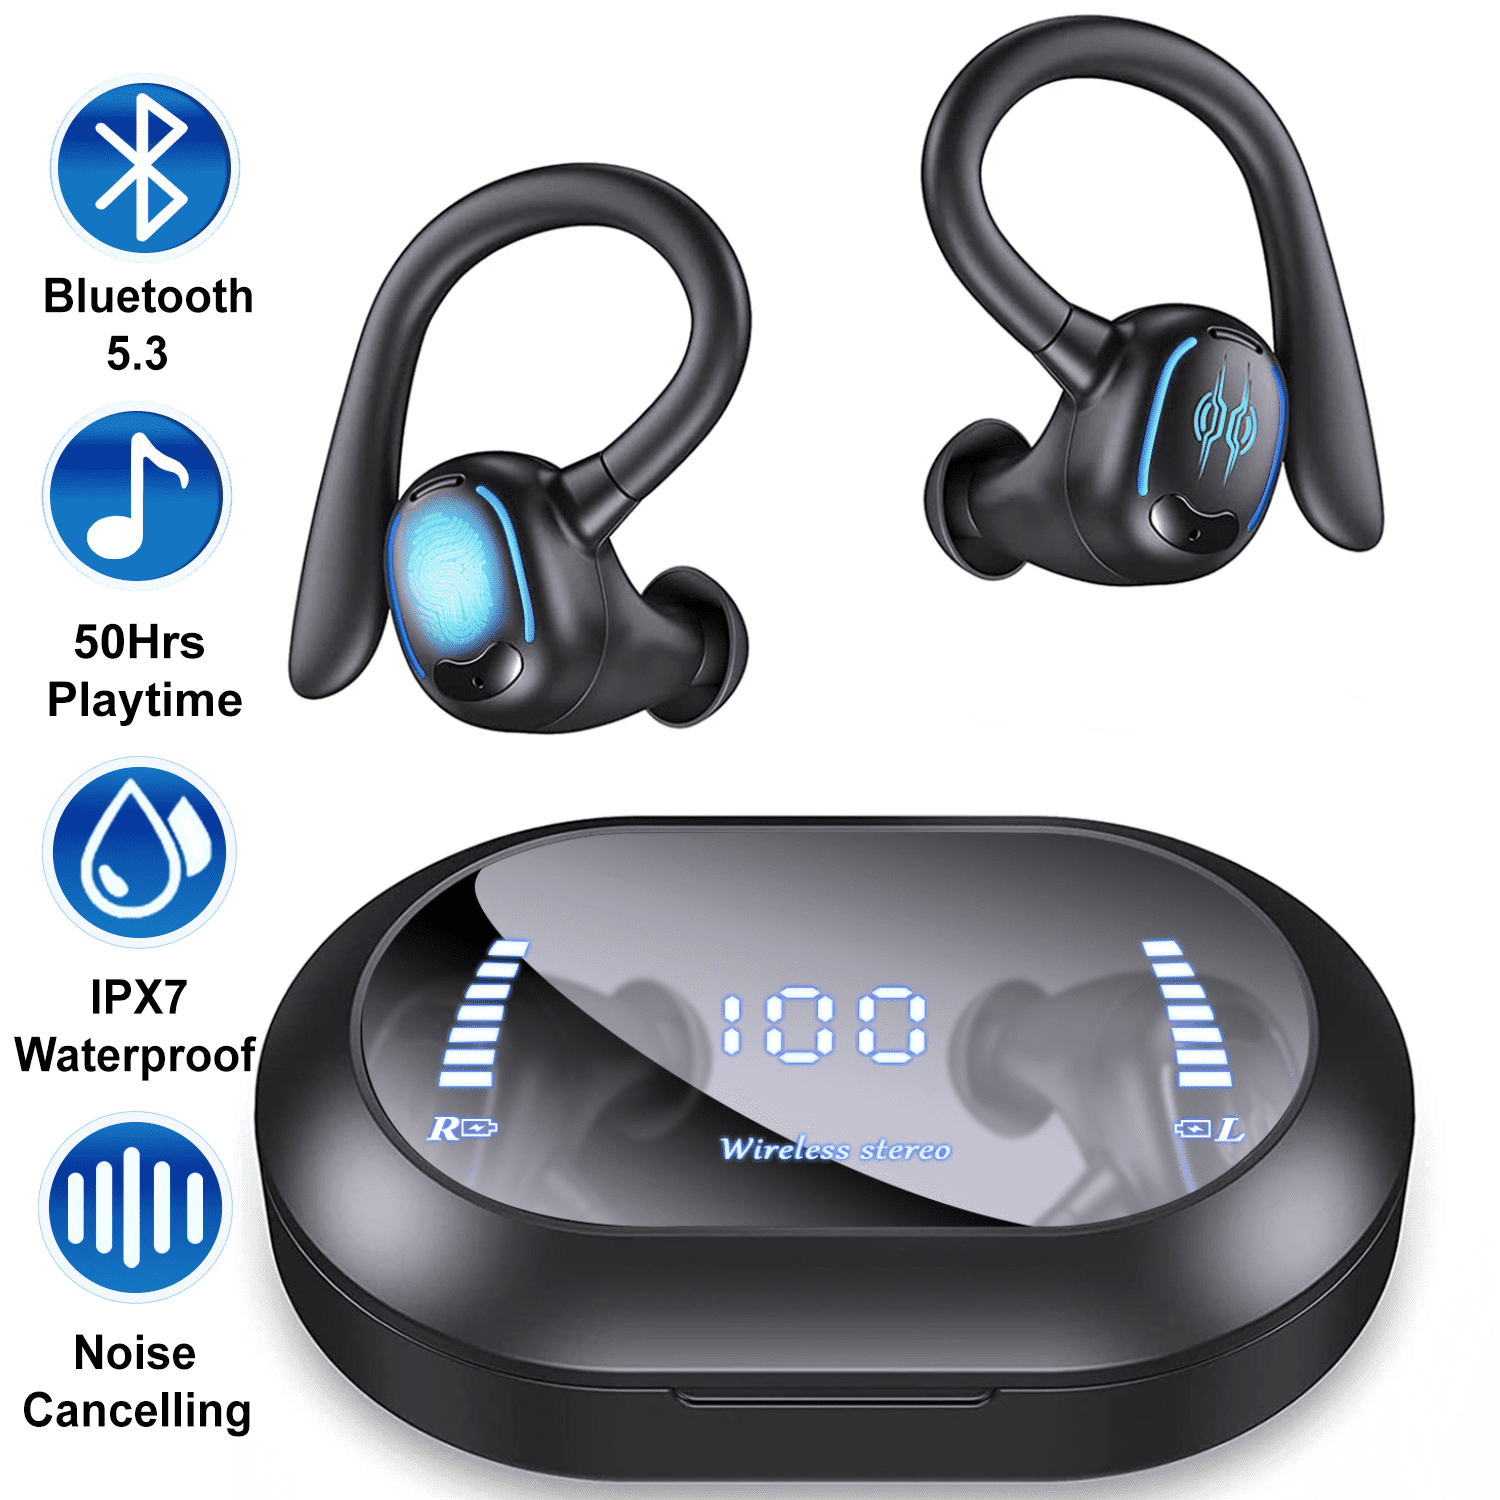 FiveBox Wireless Earbuds Bluetooth 5.3 Headphones for iPhone